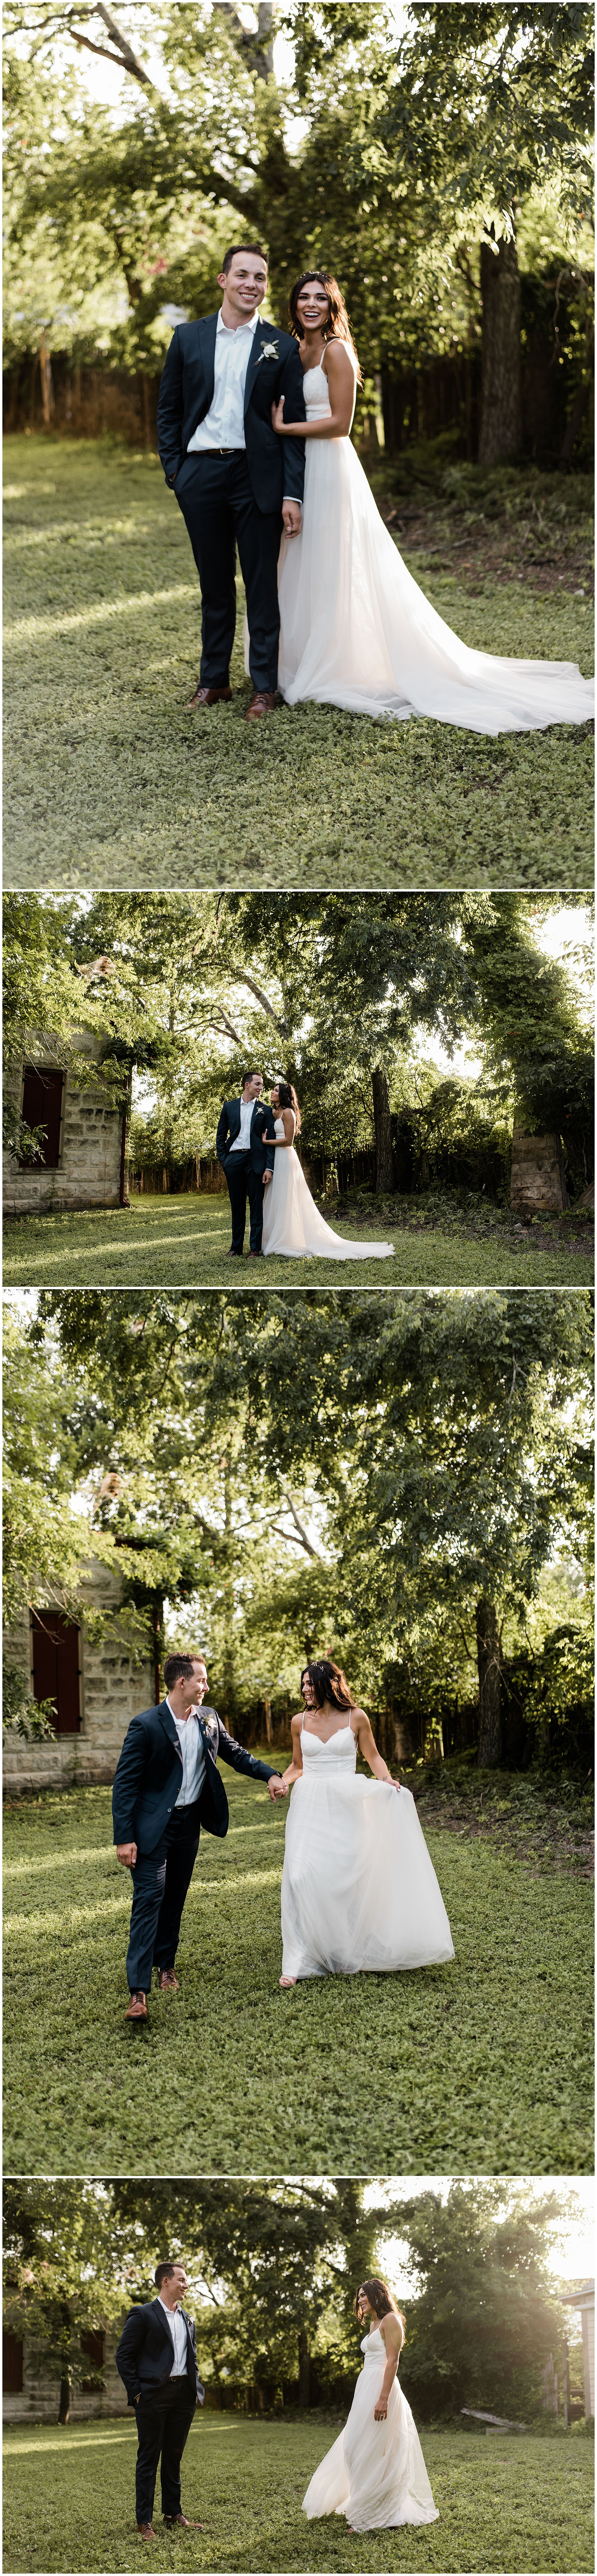  Ingenhuett on High wedding | Dallas wedding photographer | Fort Worth wedding photographer | www.jordanmitchellphotography.com 